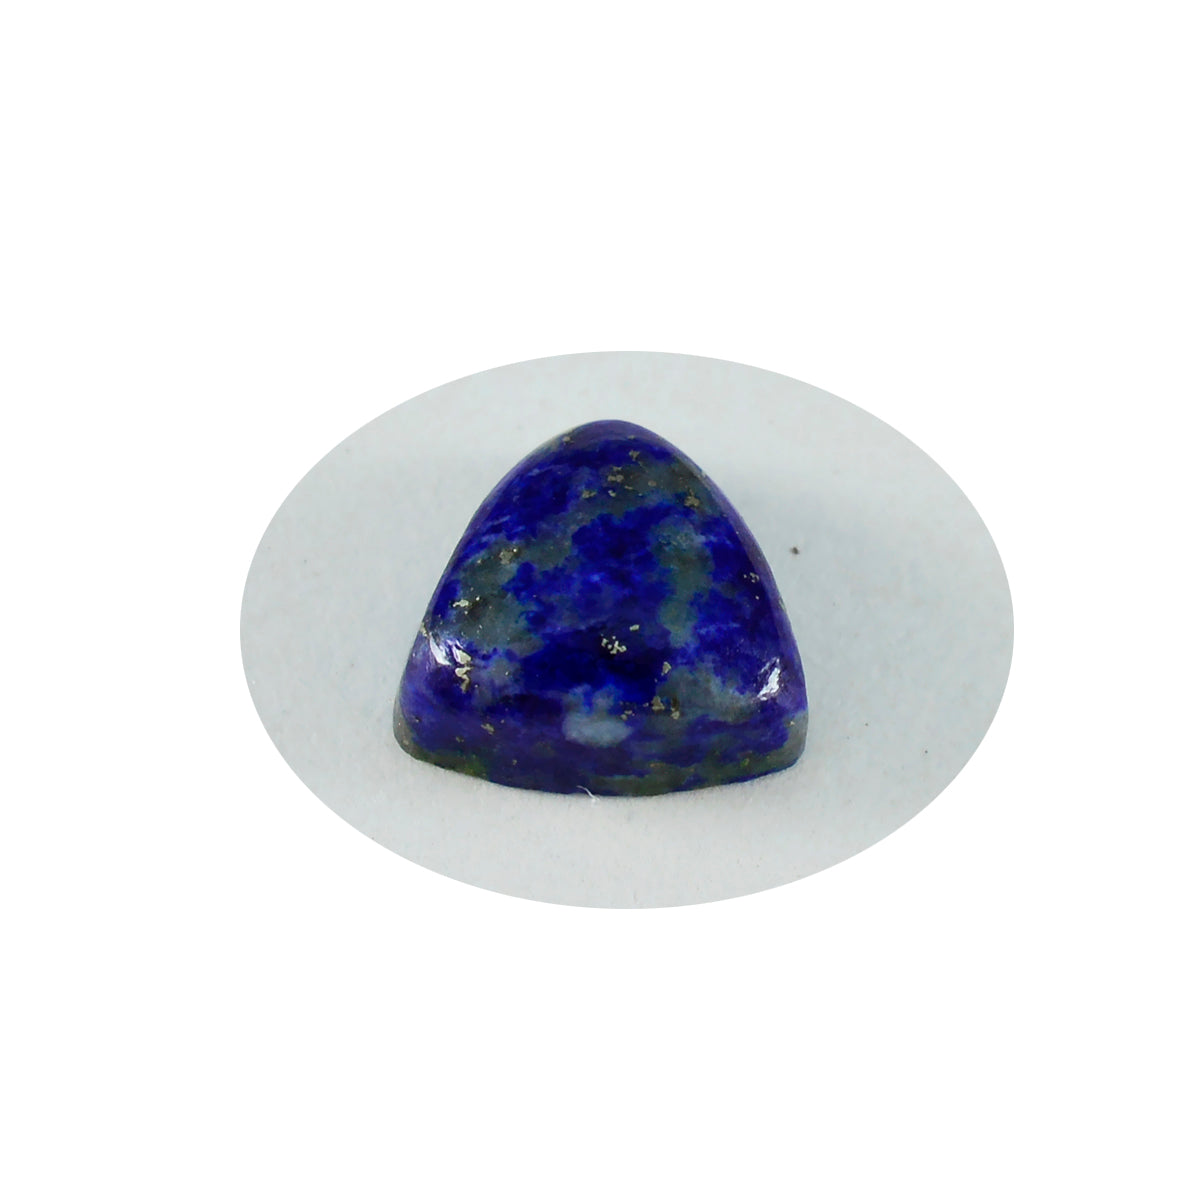 Riyogems 1PC Blue Lapis Lazuli Cabochon 15x15 mm Trillion Shape lovely Quality Loose Stone